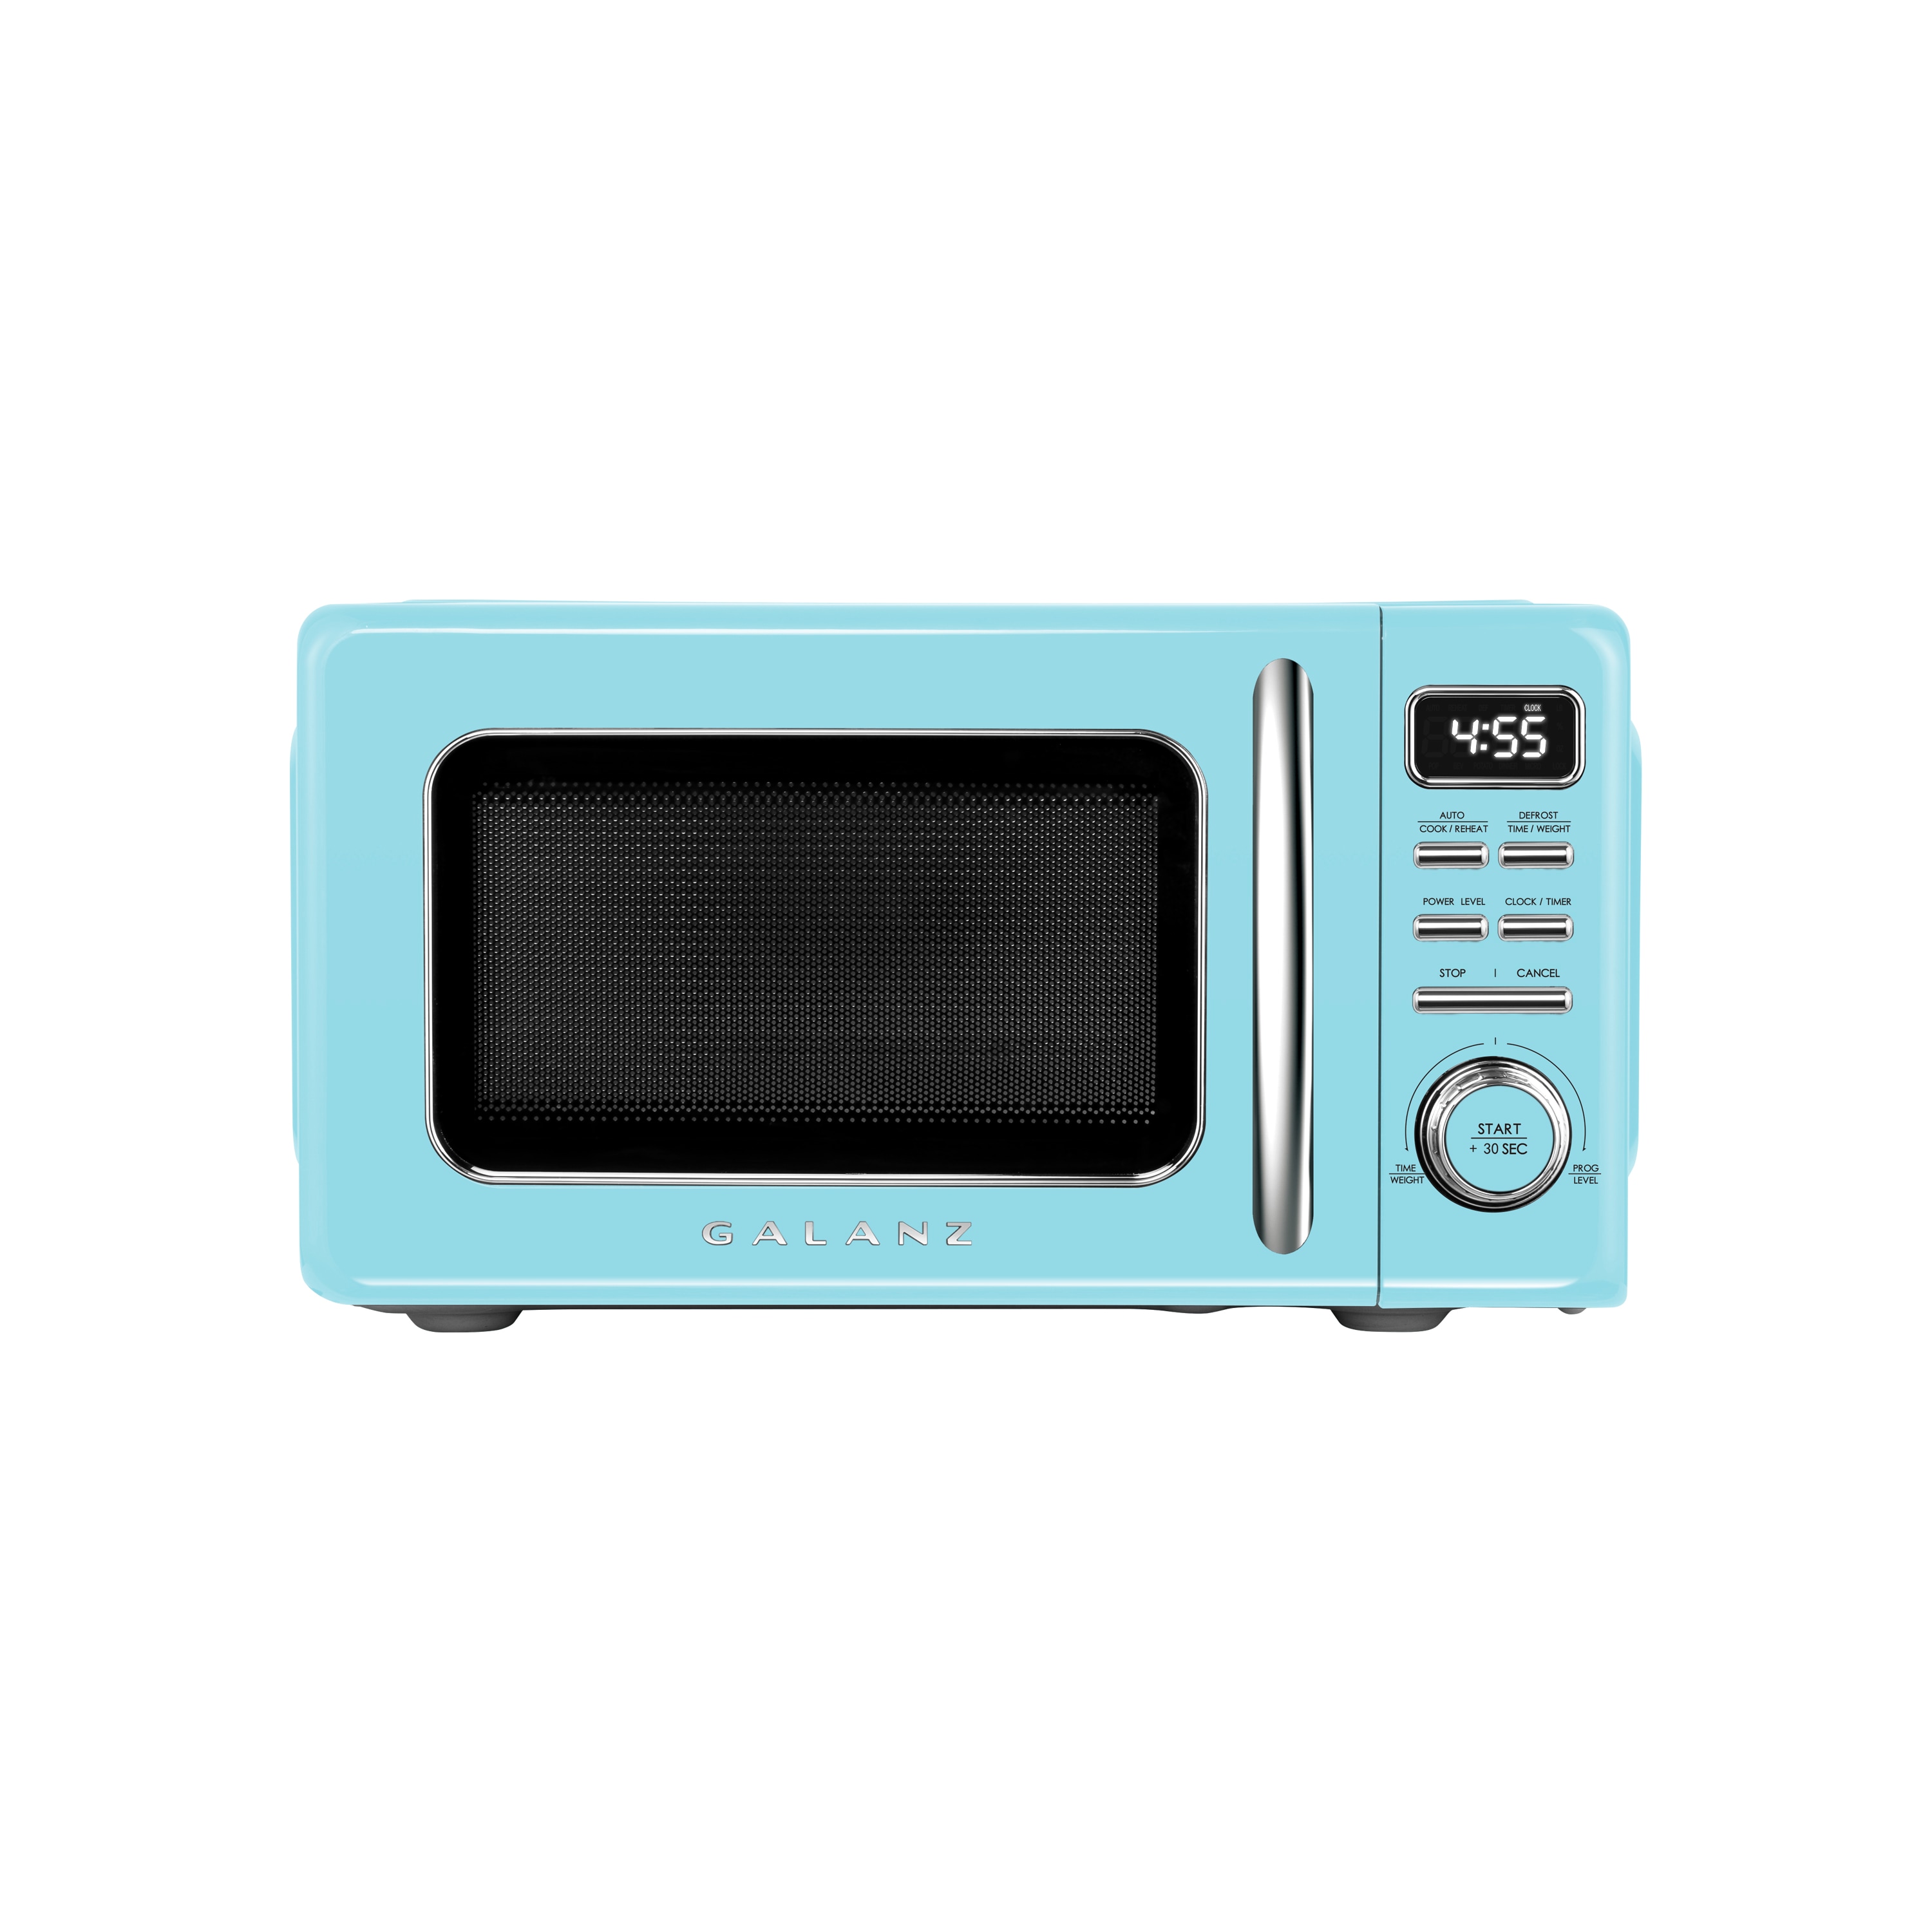 Nostalgia Retro 0.7 Cu. ft. 700-Watt Countertop Microwave Oven - Pink